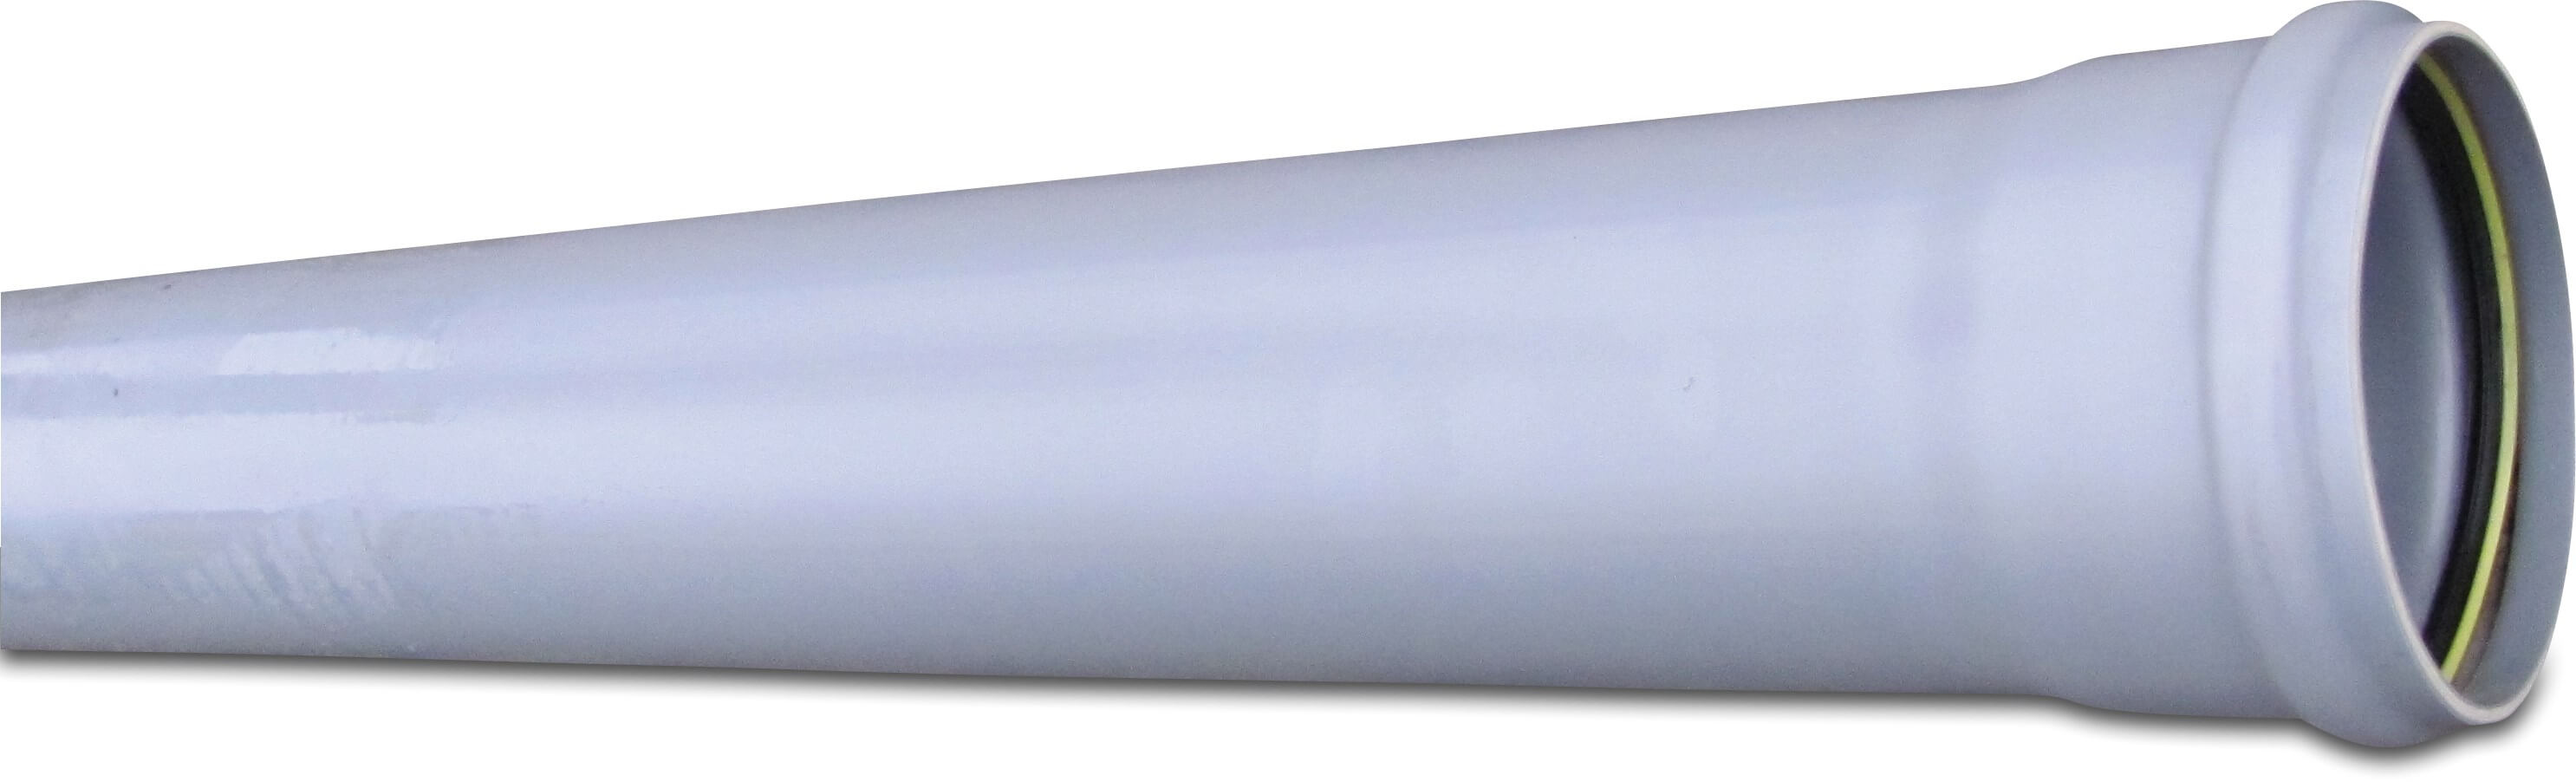 Afvoerbuis PVC-U 125 mm x 3,7 mm SN8 manchet x glad grijs 5m KOMO